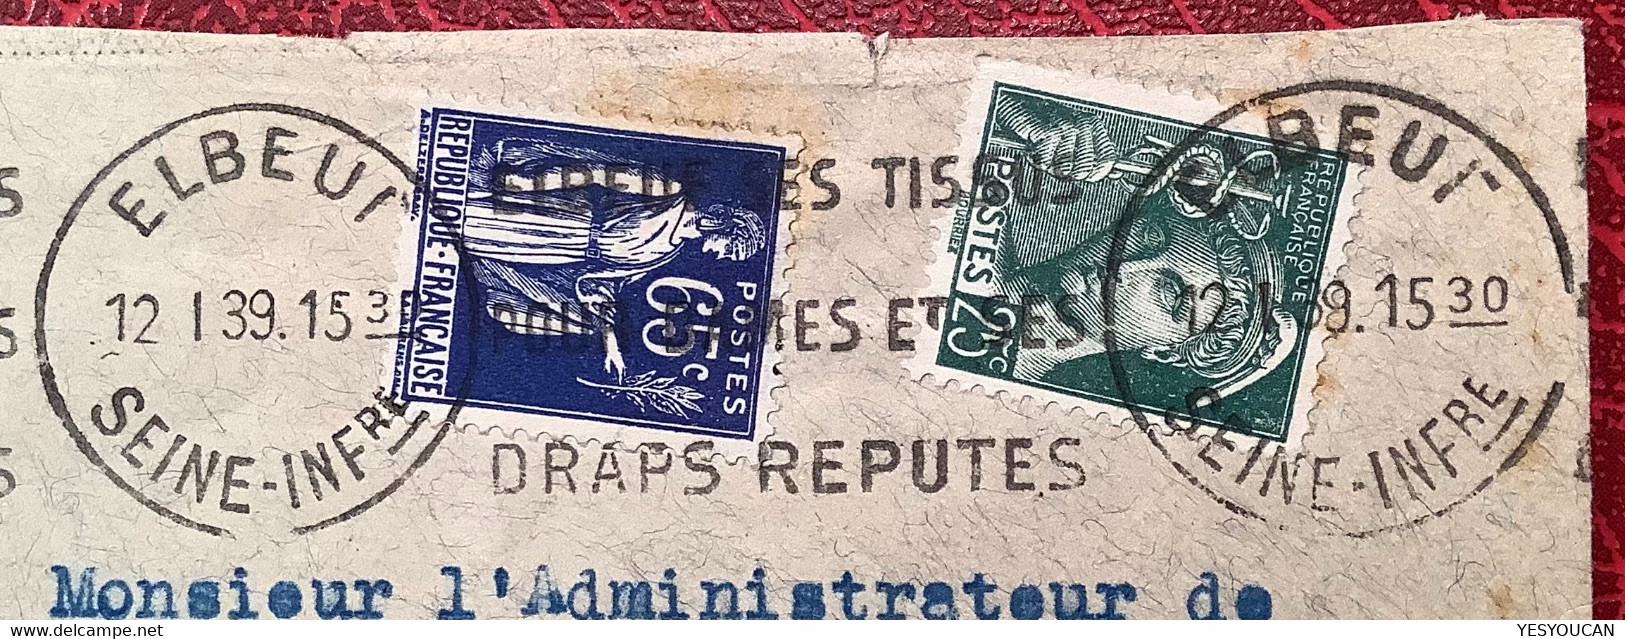 NIEDERLENZ AARGAU 1939 Schweiz Nachportomarken 1937+1938 Brief France Paix+Mercure Elbeuf(Portomarke Lettre Taxé Textile - Portomarken